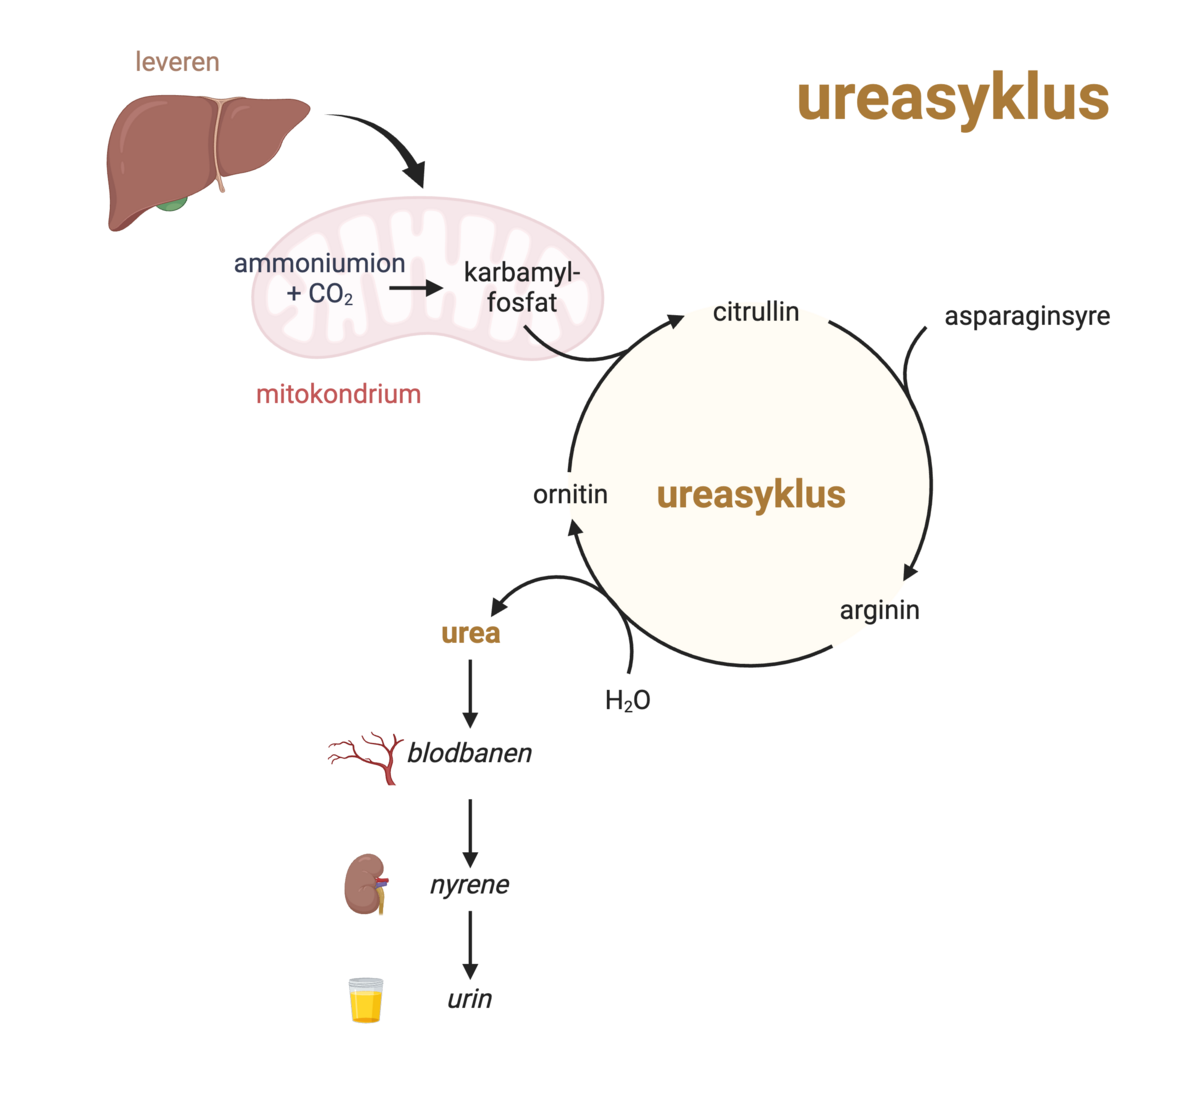 Ureasyklus